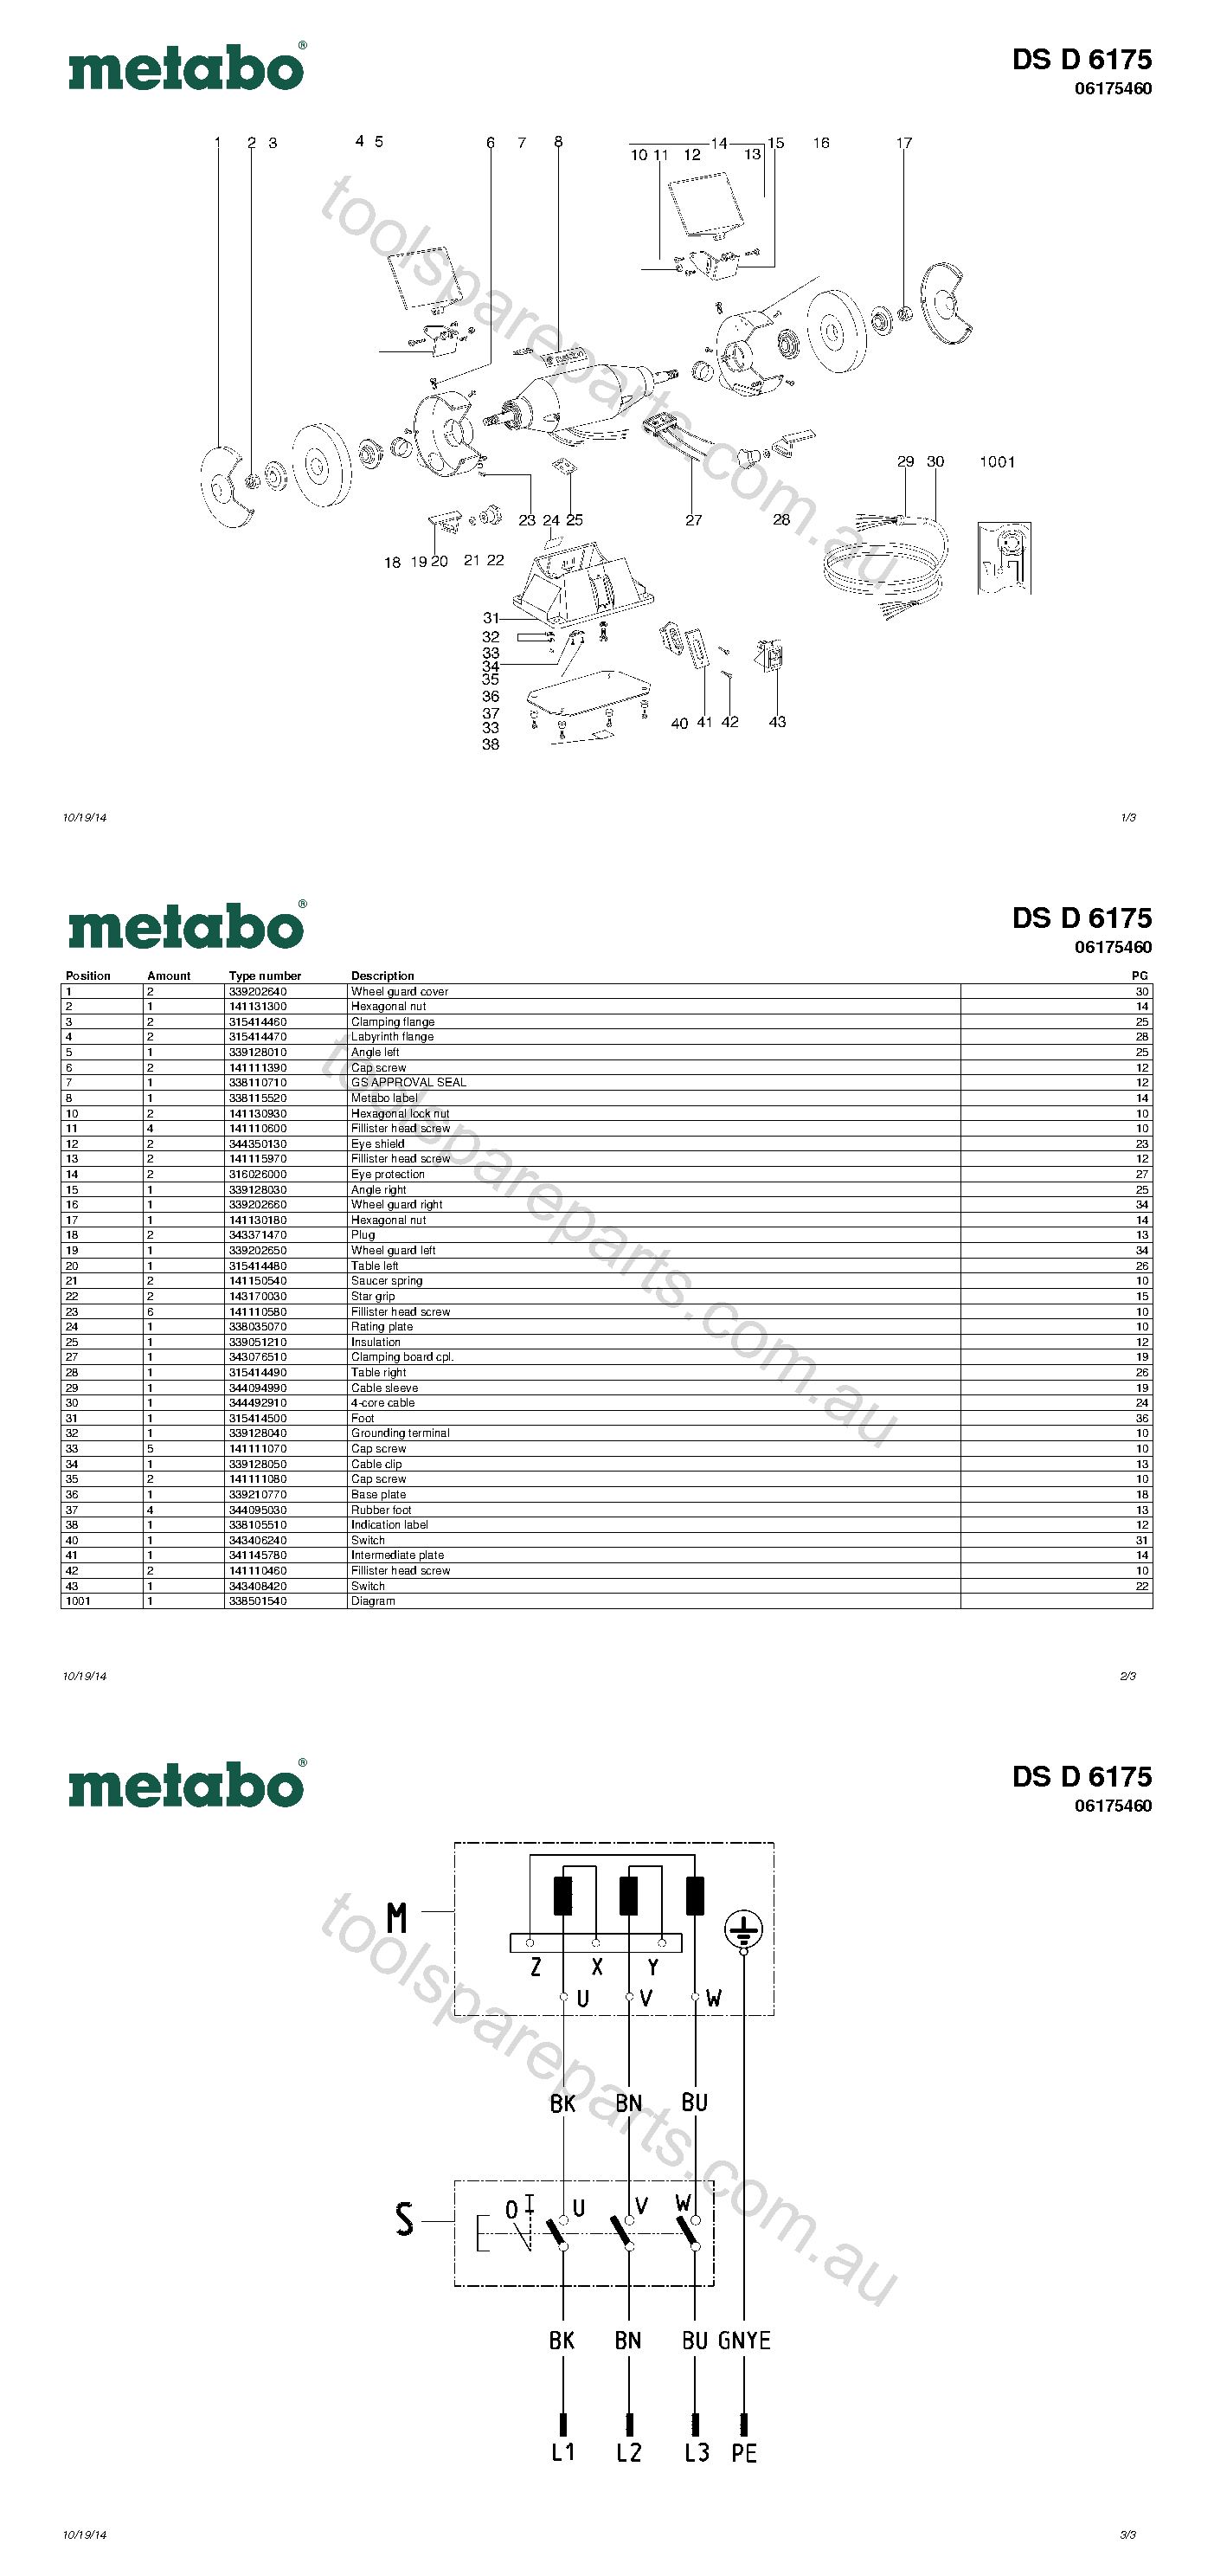 Metabo DS D 6175 06175460  Diagram 1